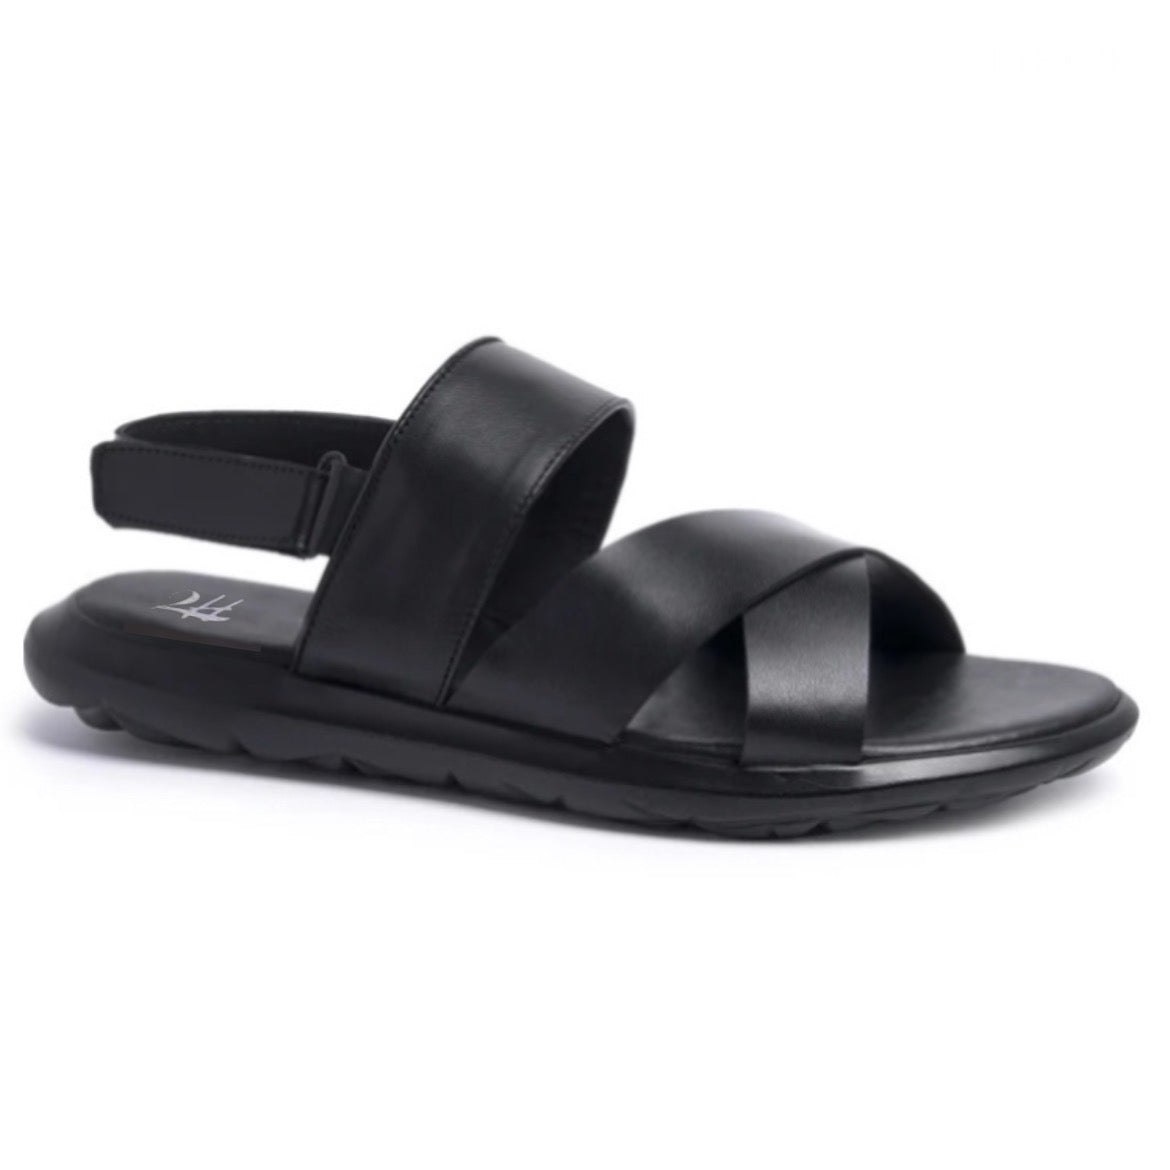 2H G10-23-1 Black Leather Sandals